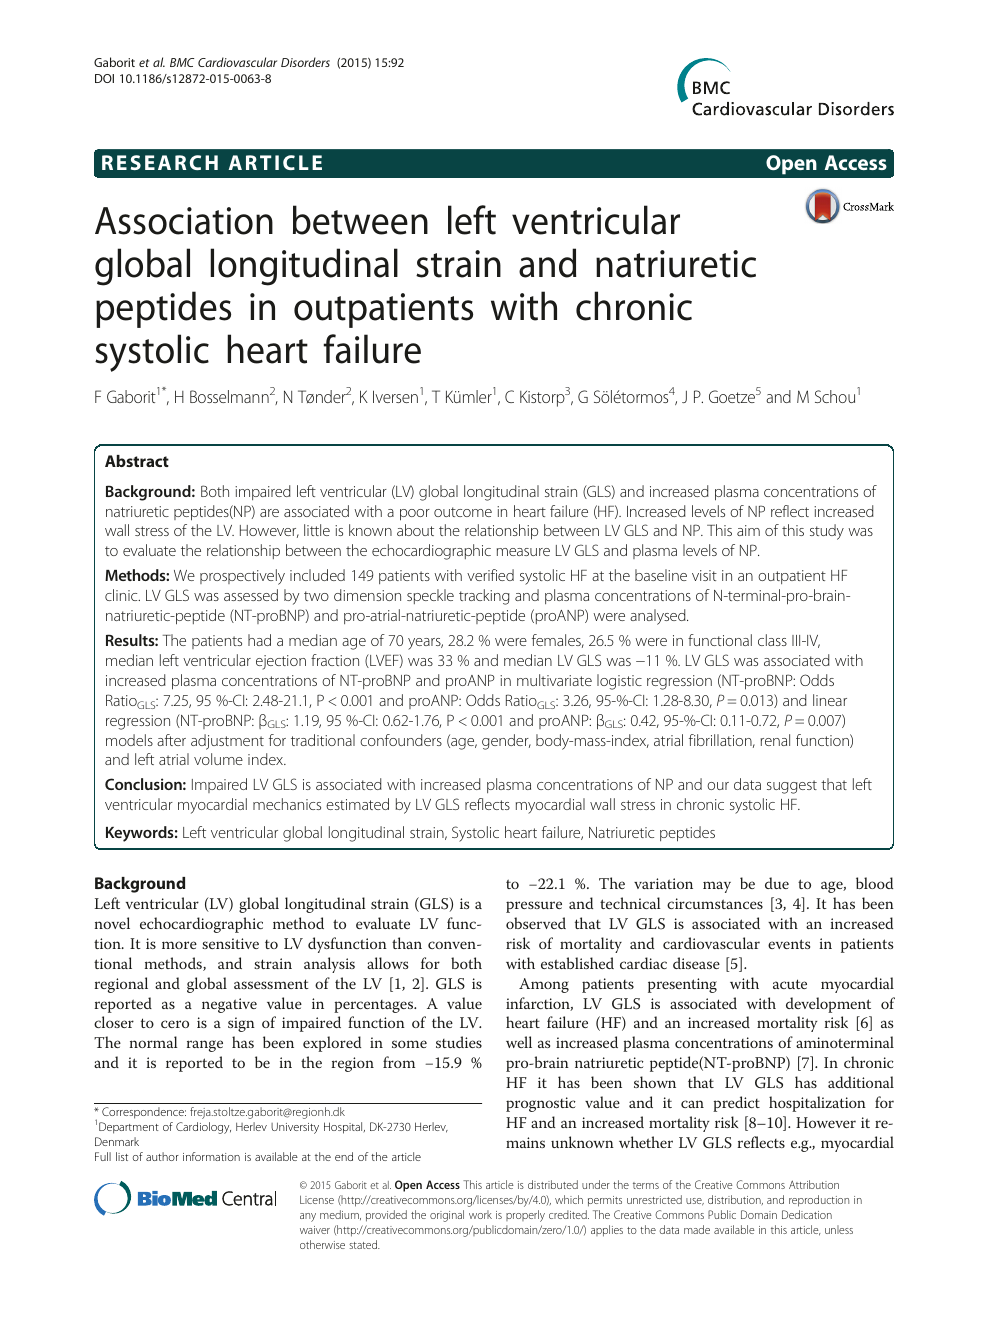 Left ventricular global longitudinal strain (GLS) in a chronic